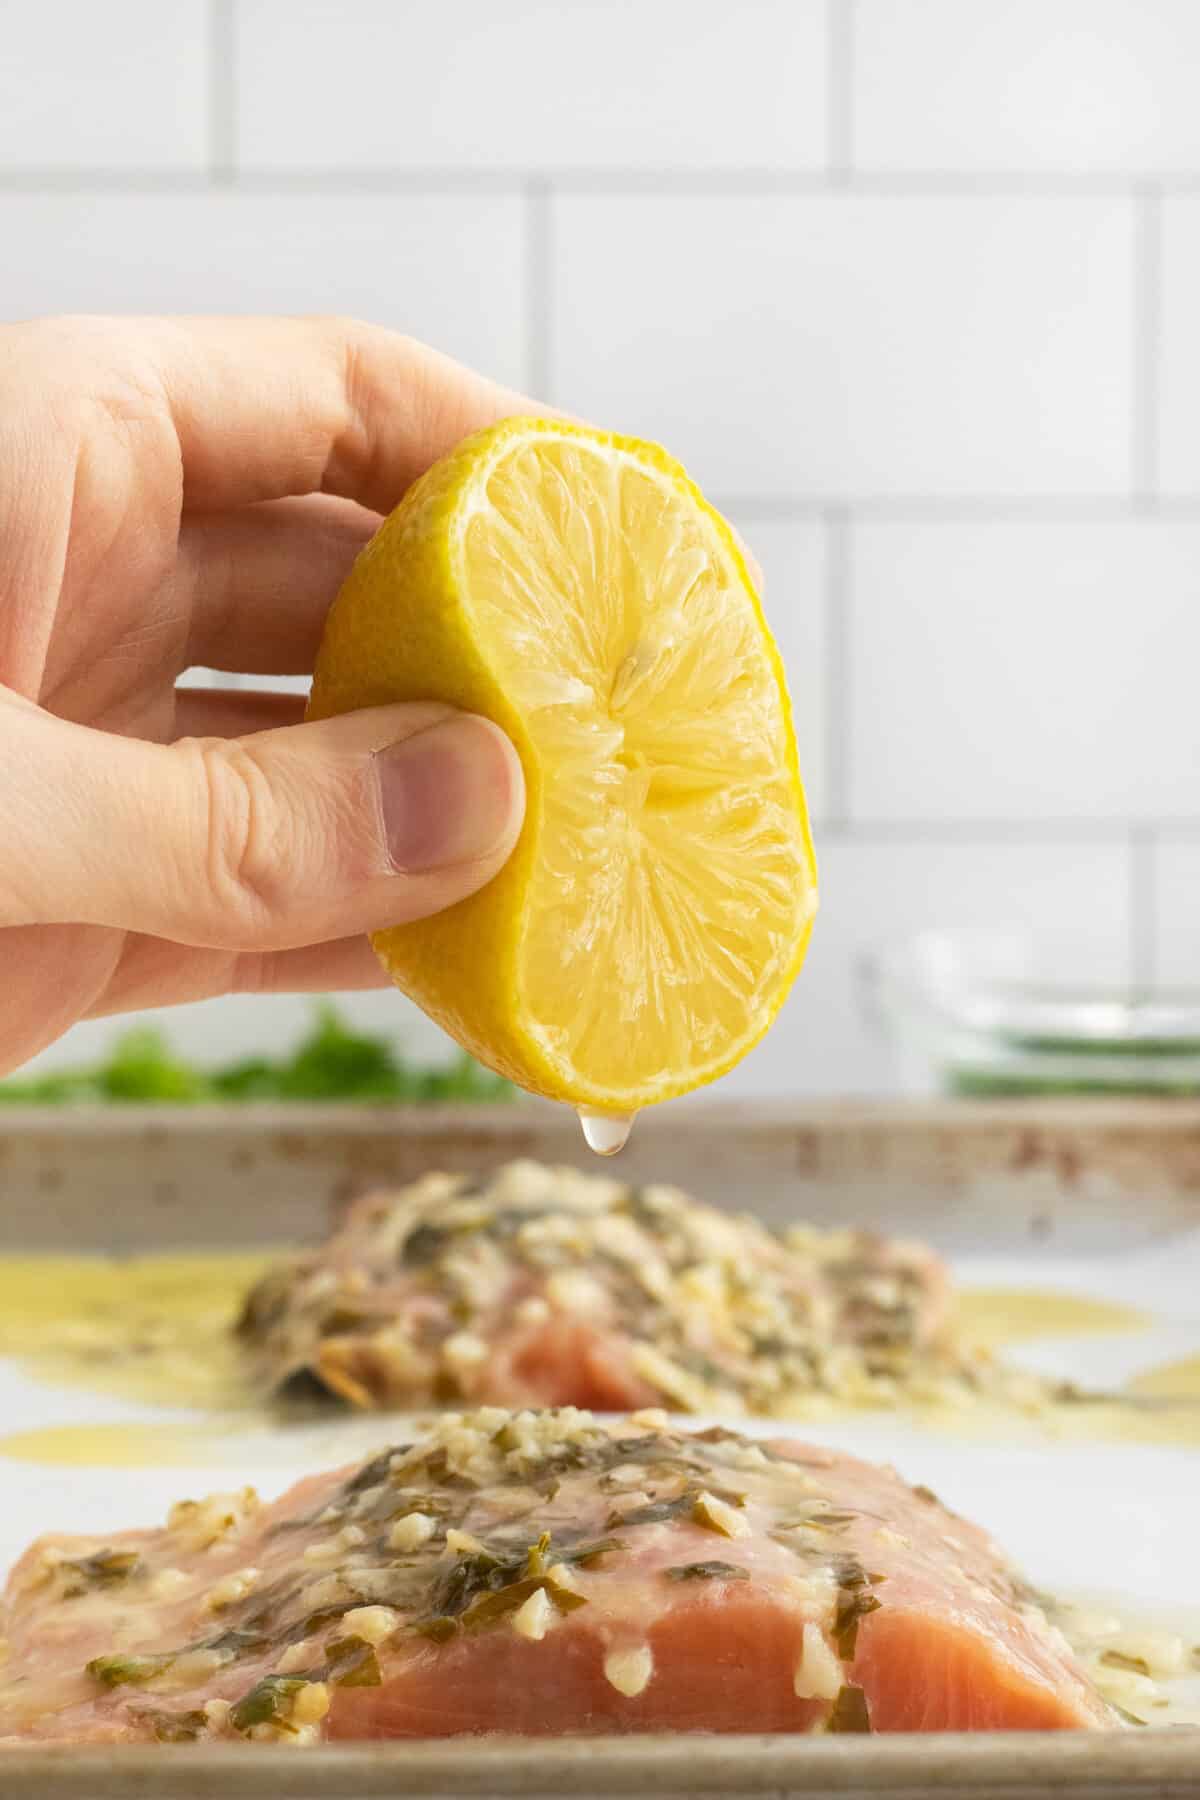 Garlic Butter Salmon with lemon dripping